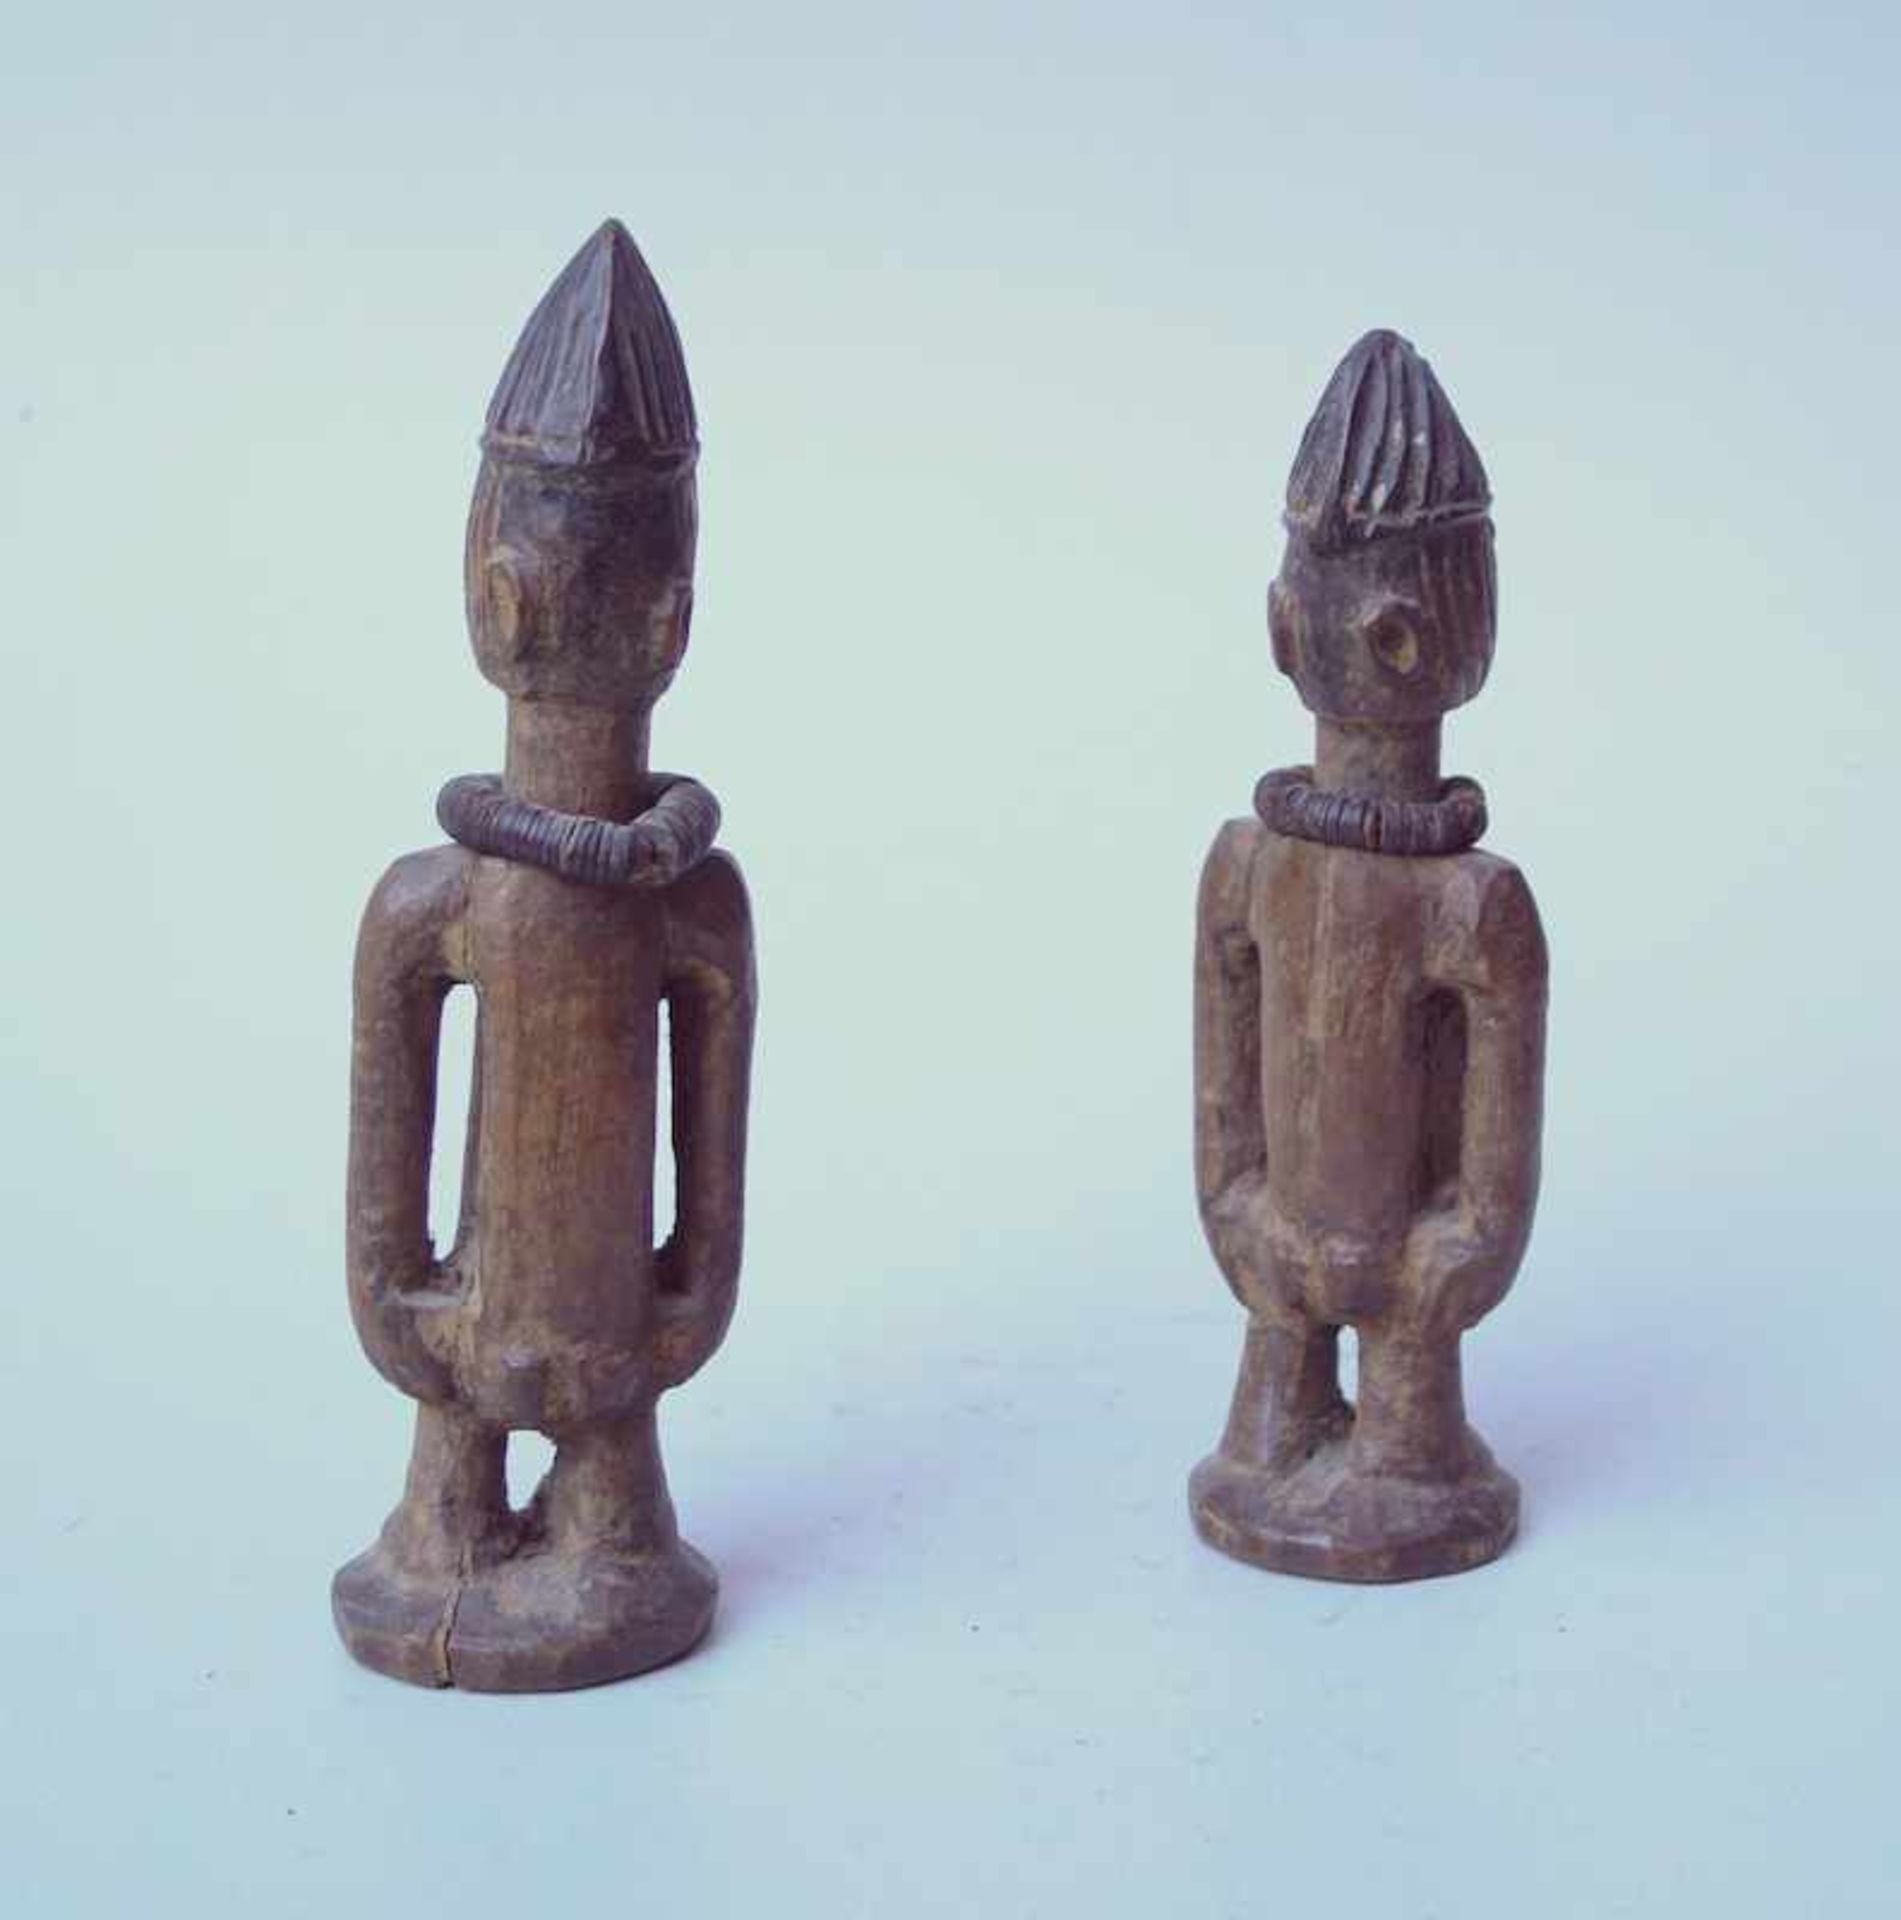 2 Ibetji Zwillingsfiguren, älterHolz geschnitzt partiell dunkel gefärbt, Höhe 23cm und 26cm. - Image 2 of 2